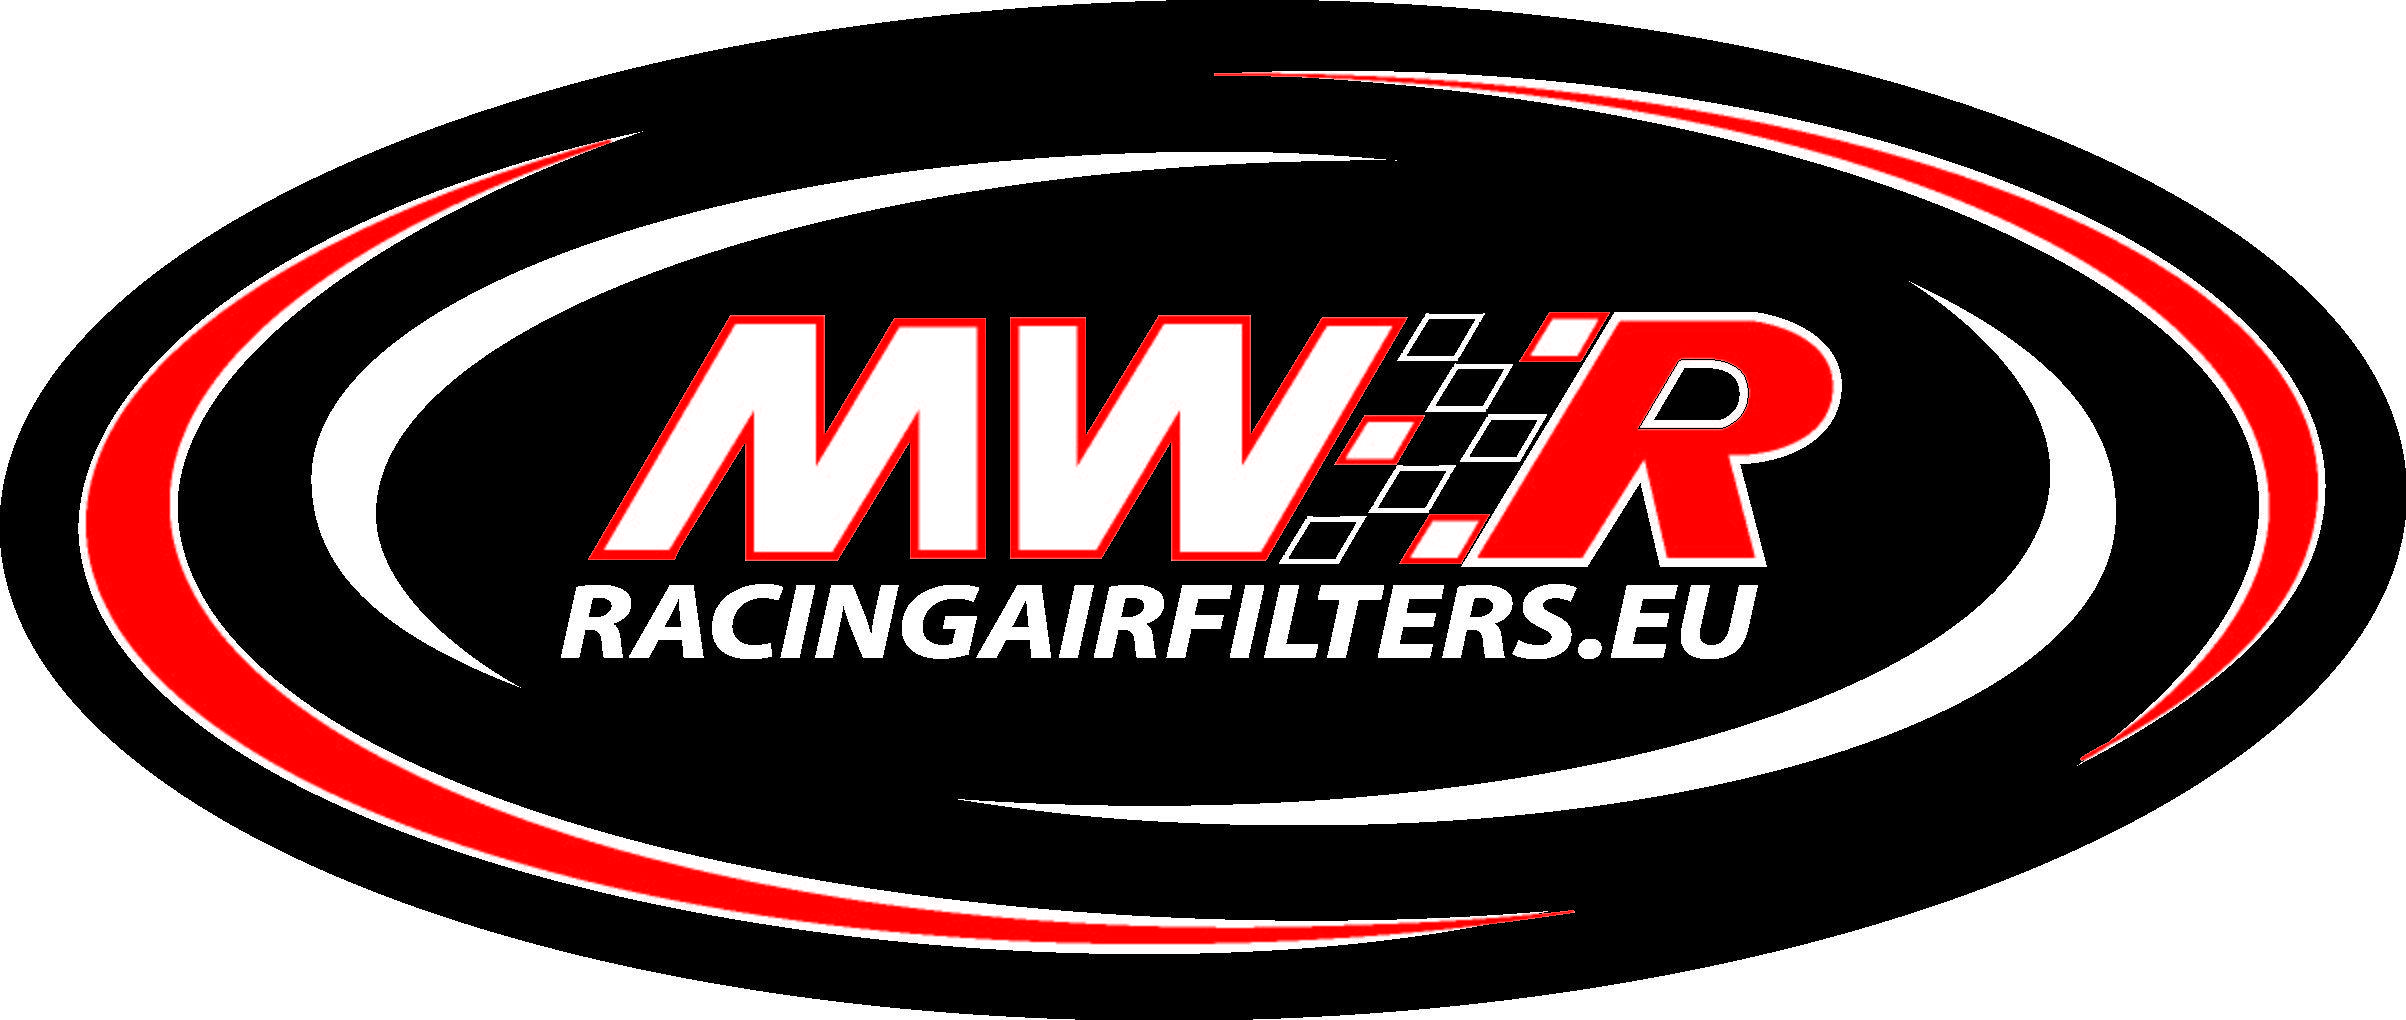 MWR Logo - Trickbitz - logo mwr